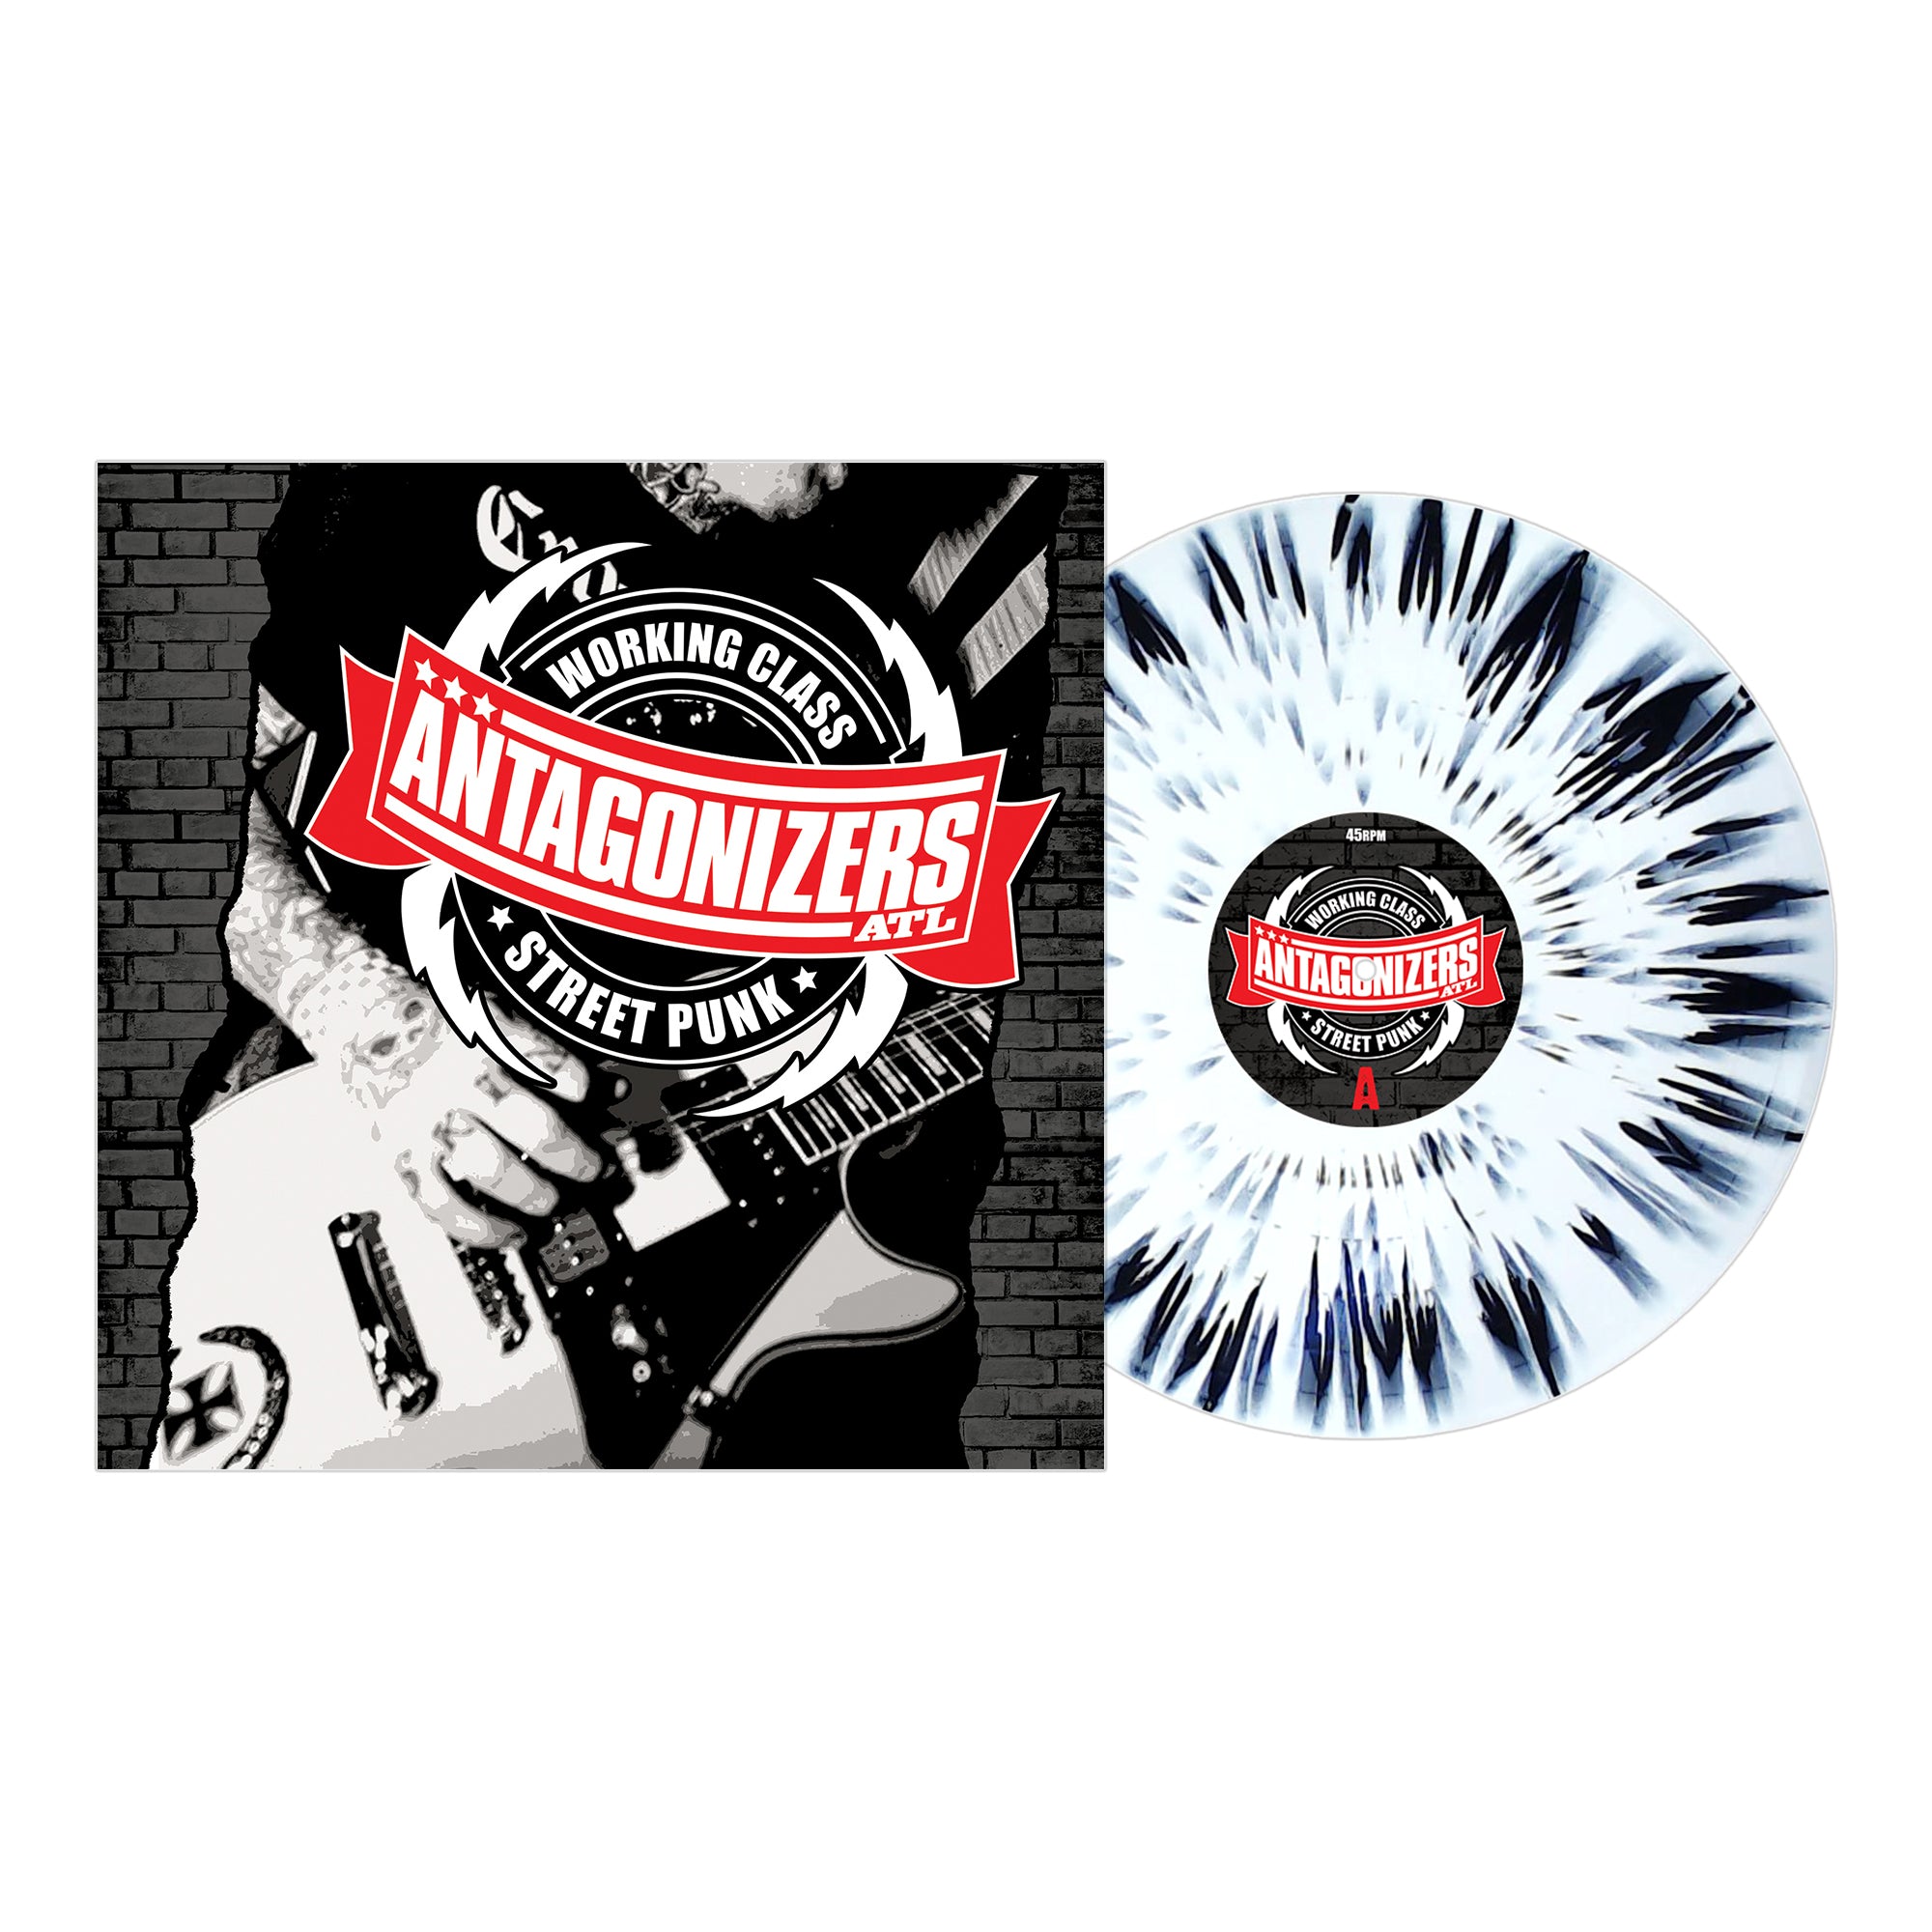 Antagonizers ATL - Working Class Street Punk White W/ Black Splatter Vinyl LP